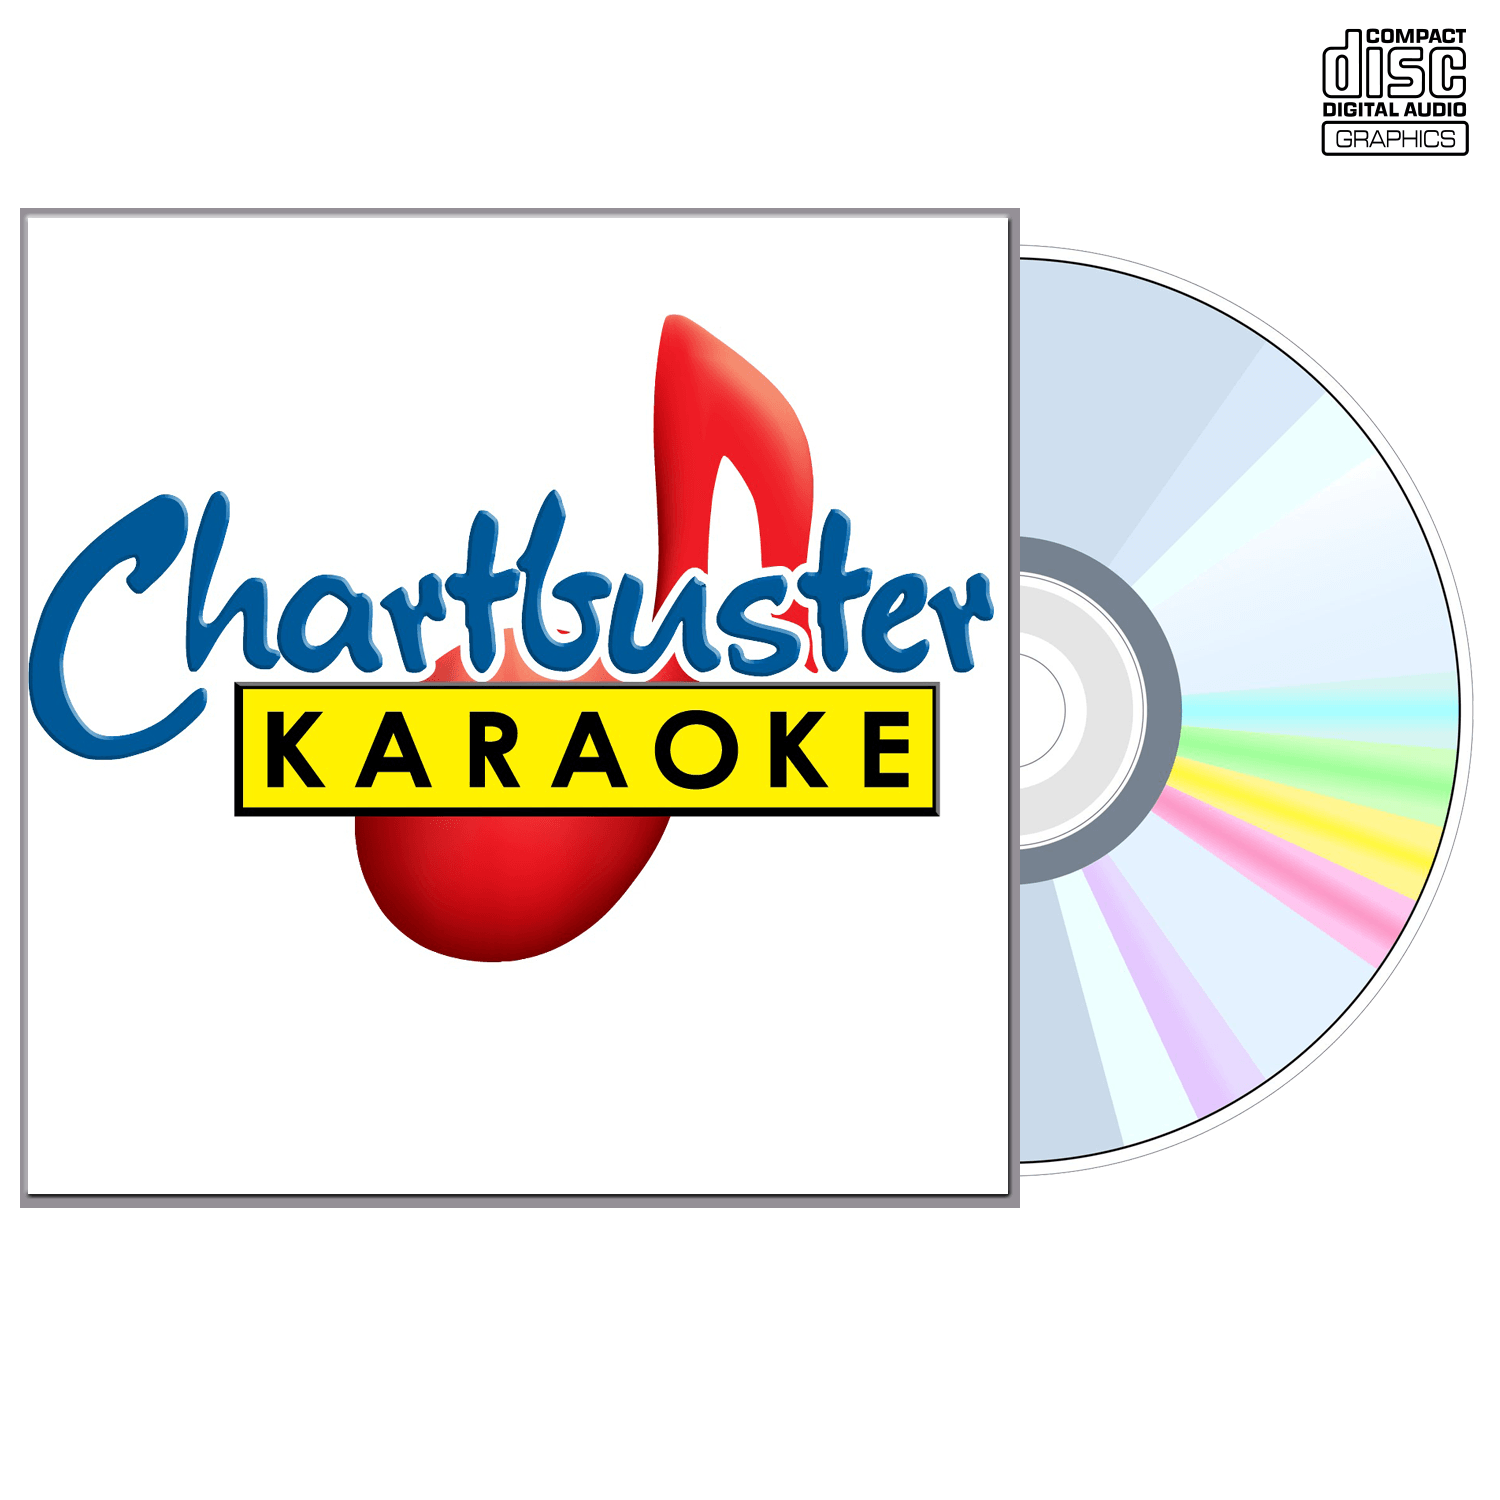 Taylor Swift Vol 2 - CD+G - Chartbuster Karaoke - Karaoke Home Entertainment